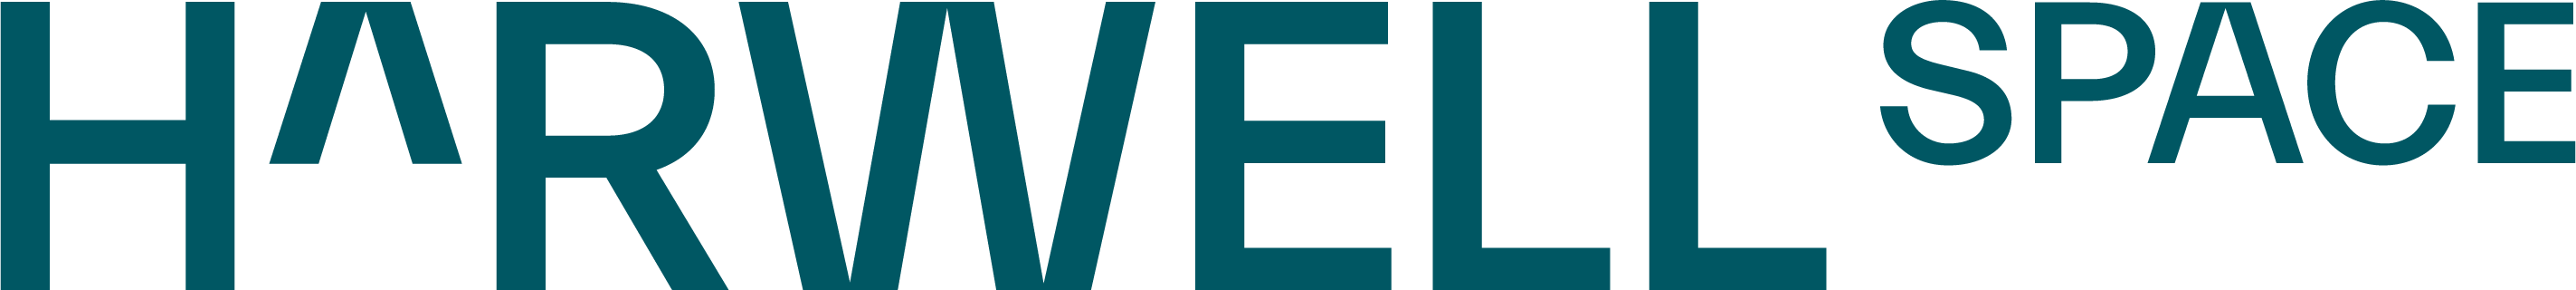 Harwell-logo